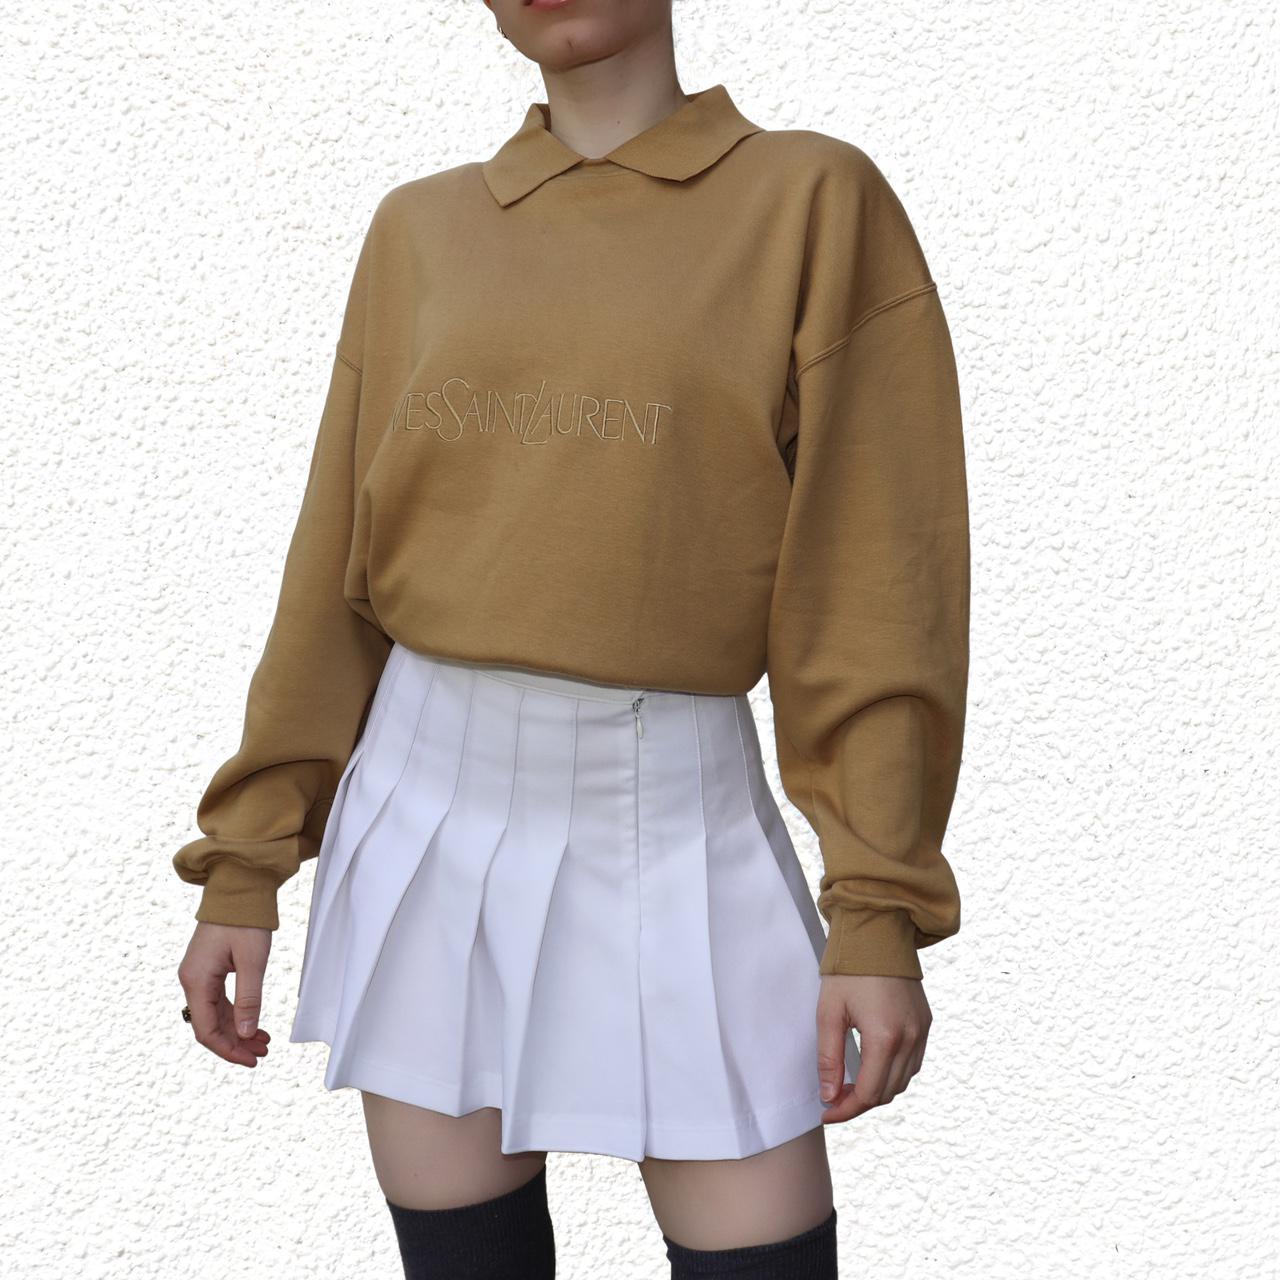 YVES SAINT LAURENT vintage sweater - tan beige with... - Depop